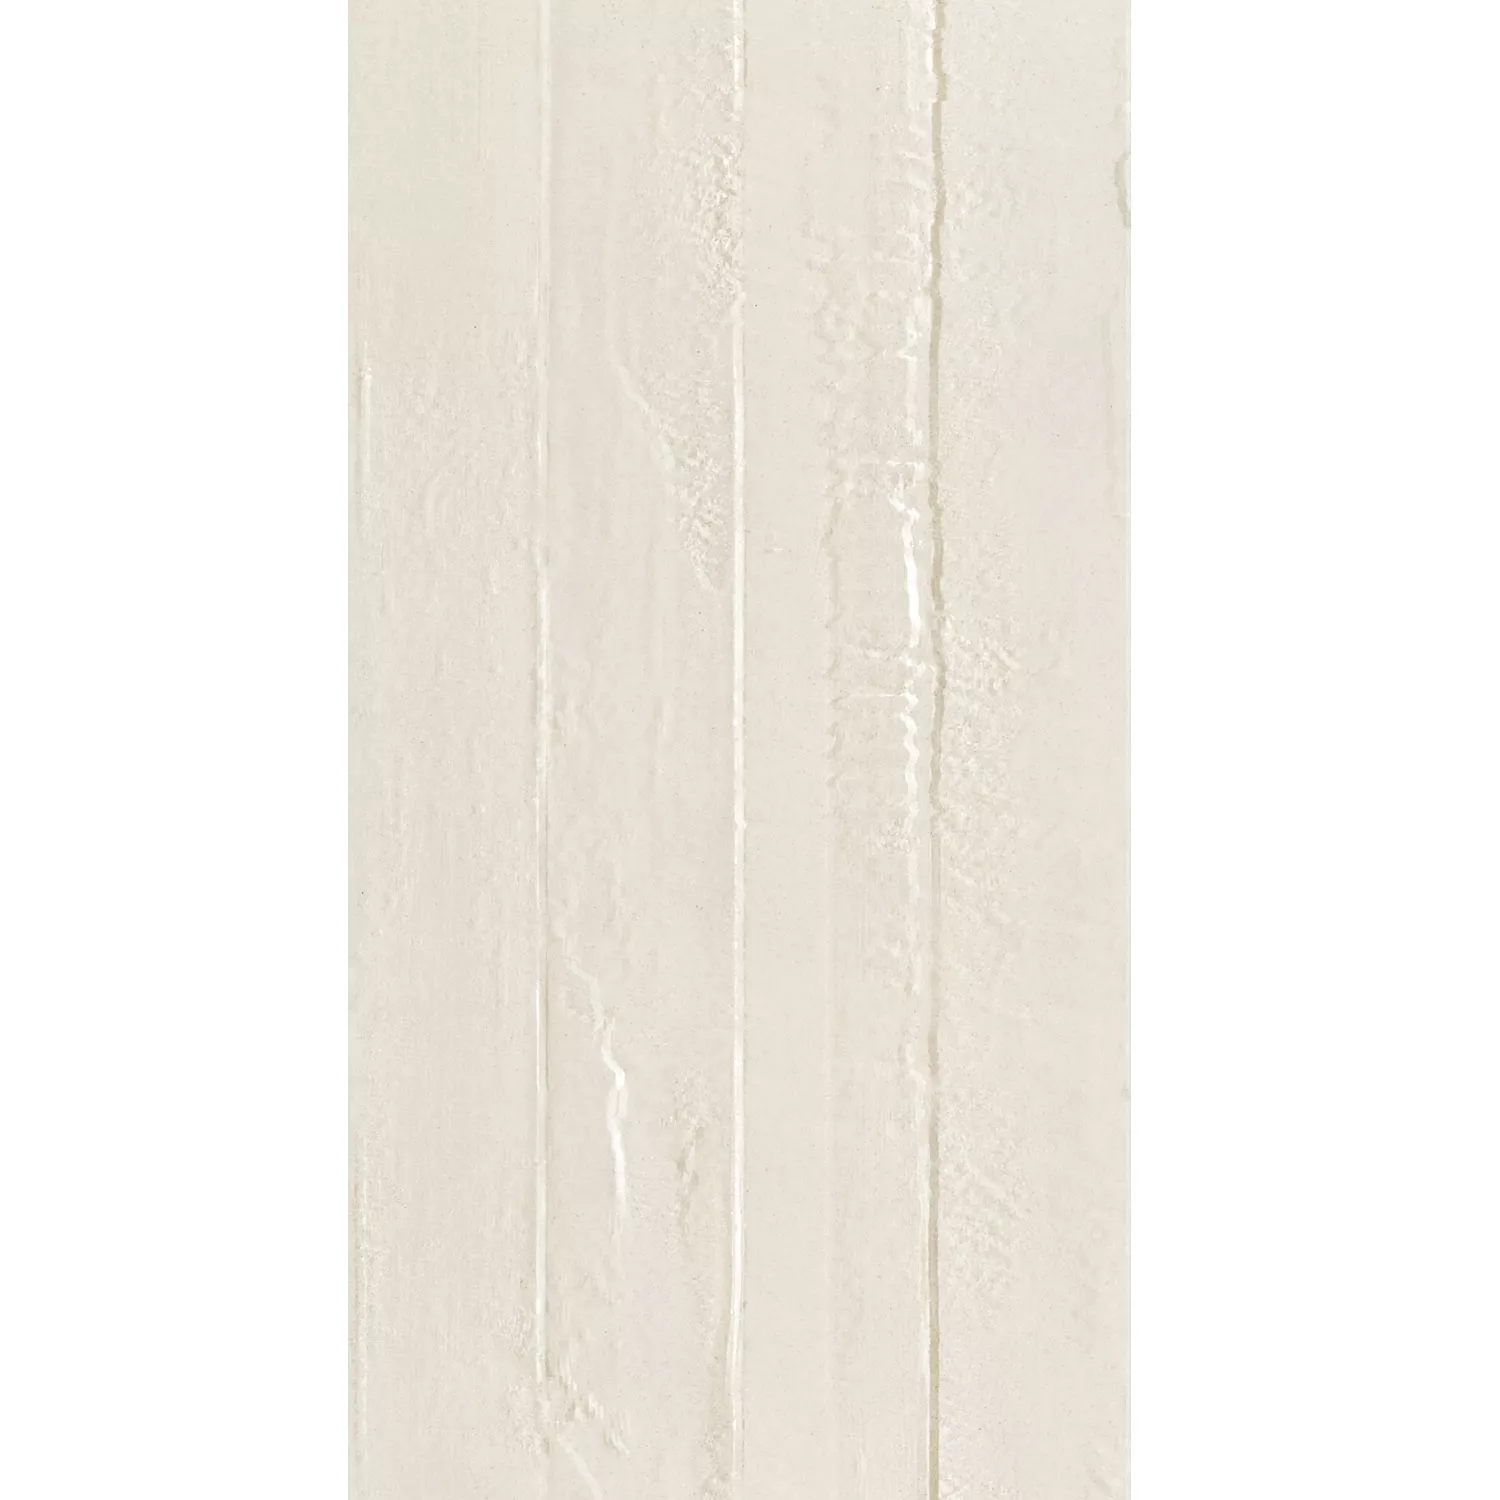 Sample Vloertegels Steen Optic Lobetal Ivory 45x90cm